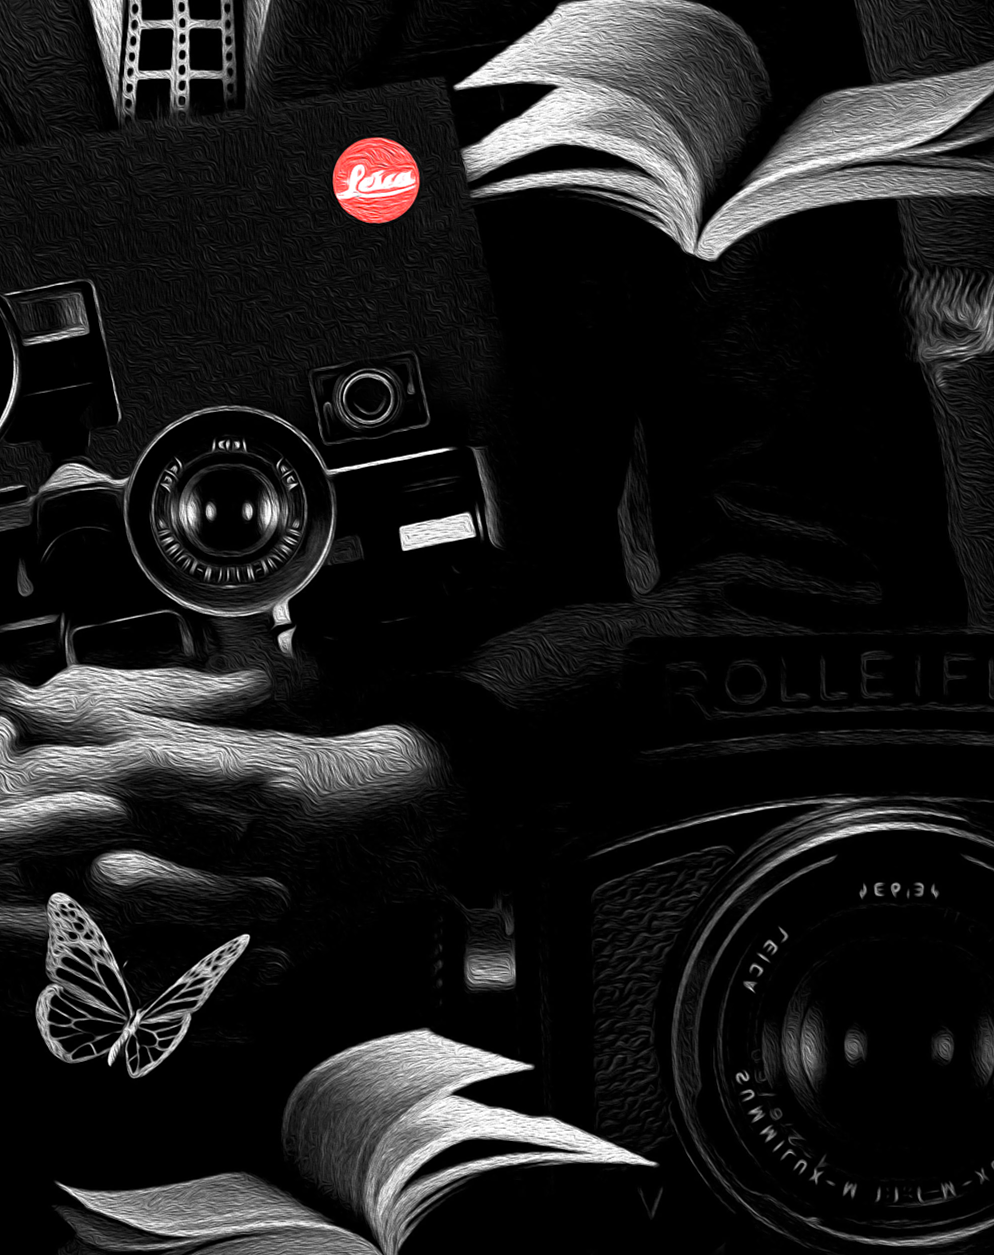 fantasmagorik nicolas obery Leica dark vintage fantastic man iron STEAMPUNK Nike curious photoshop adobe